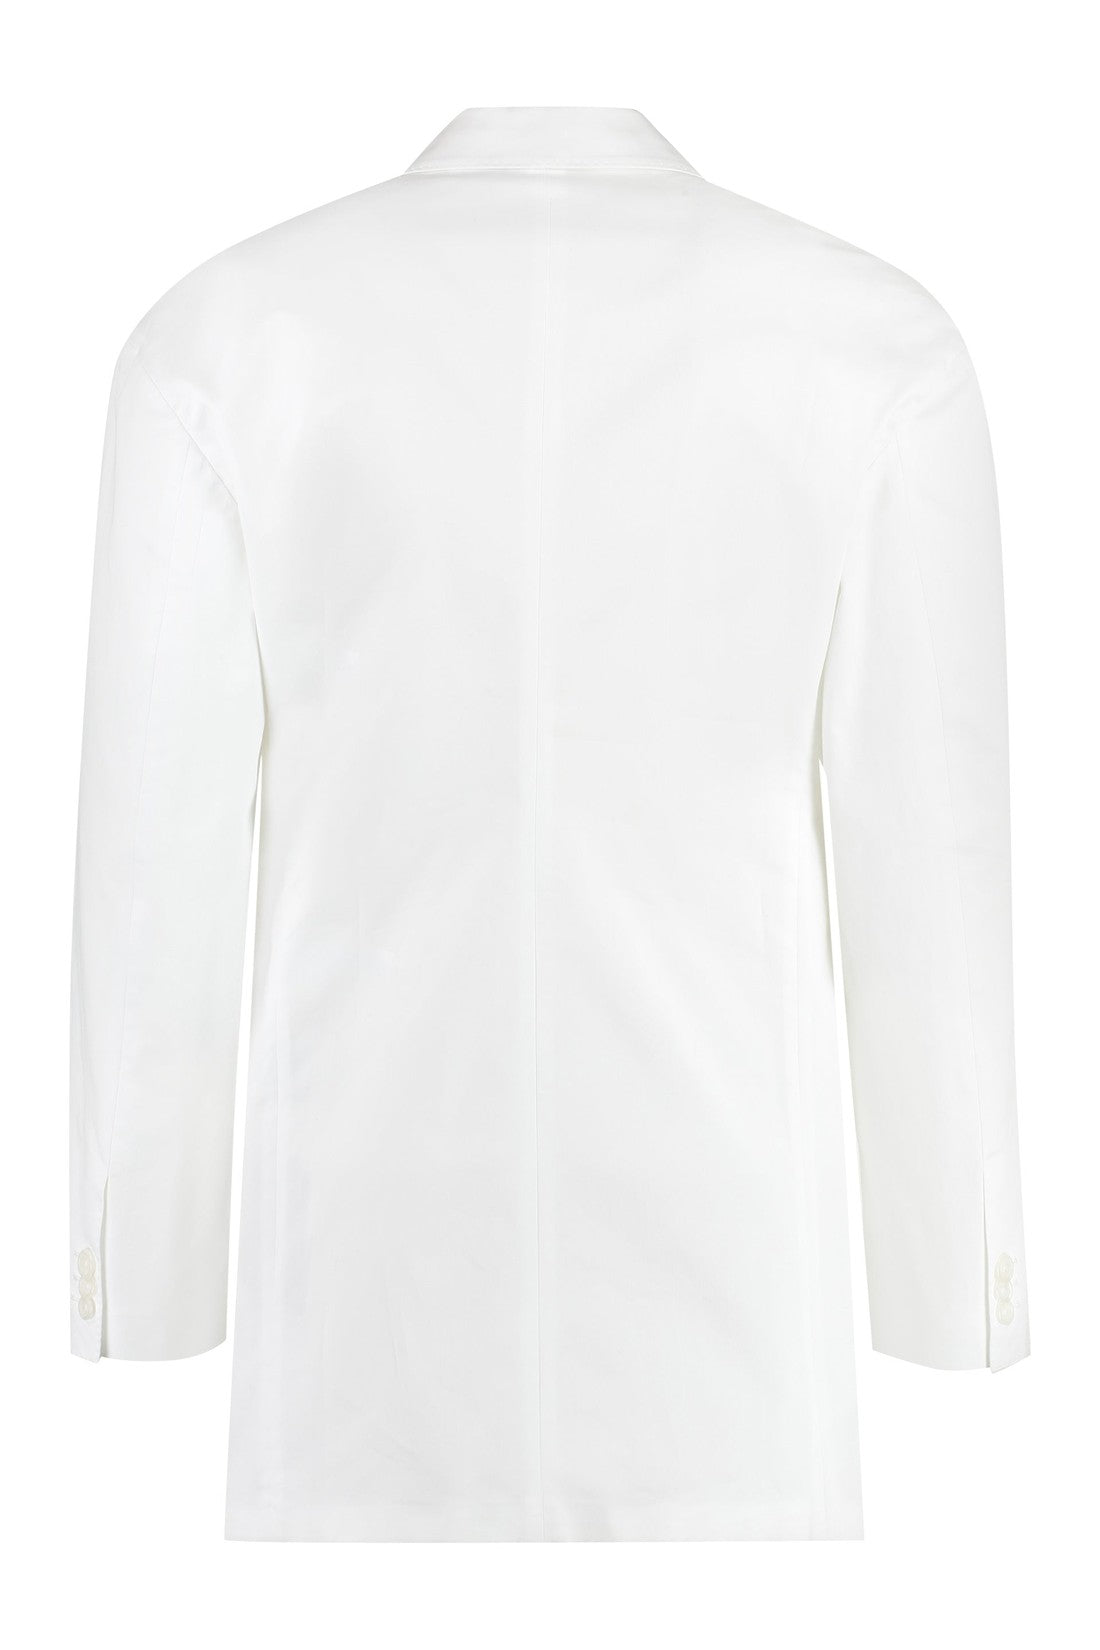 Dolce & Gabbana-OUTLET-SALE-Gabardine cotton jacket-ARCHIVIST